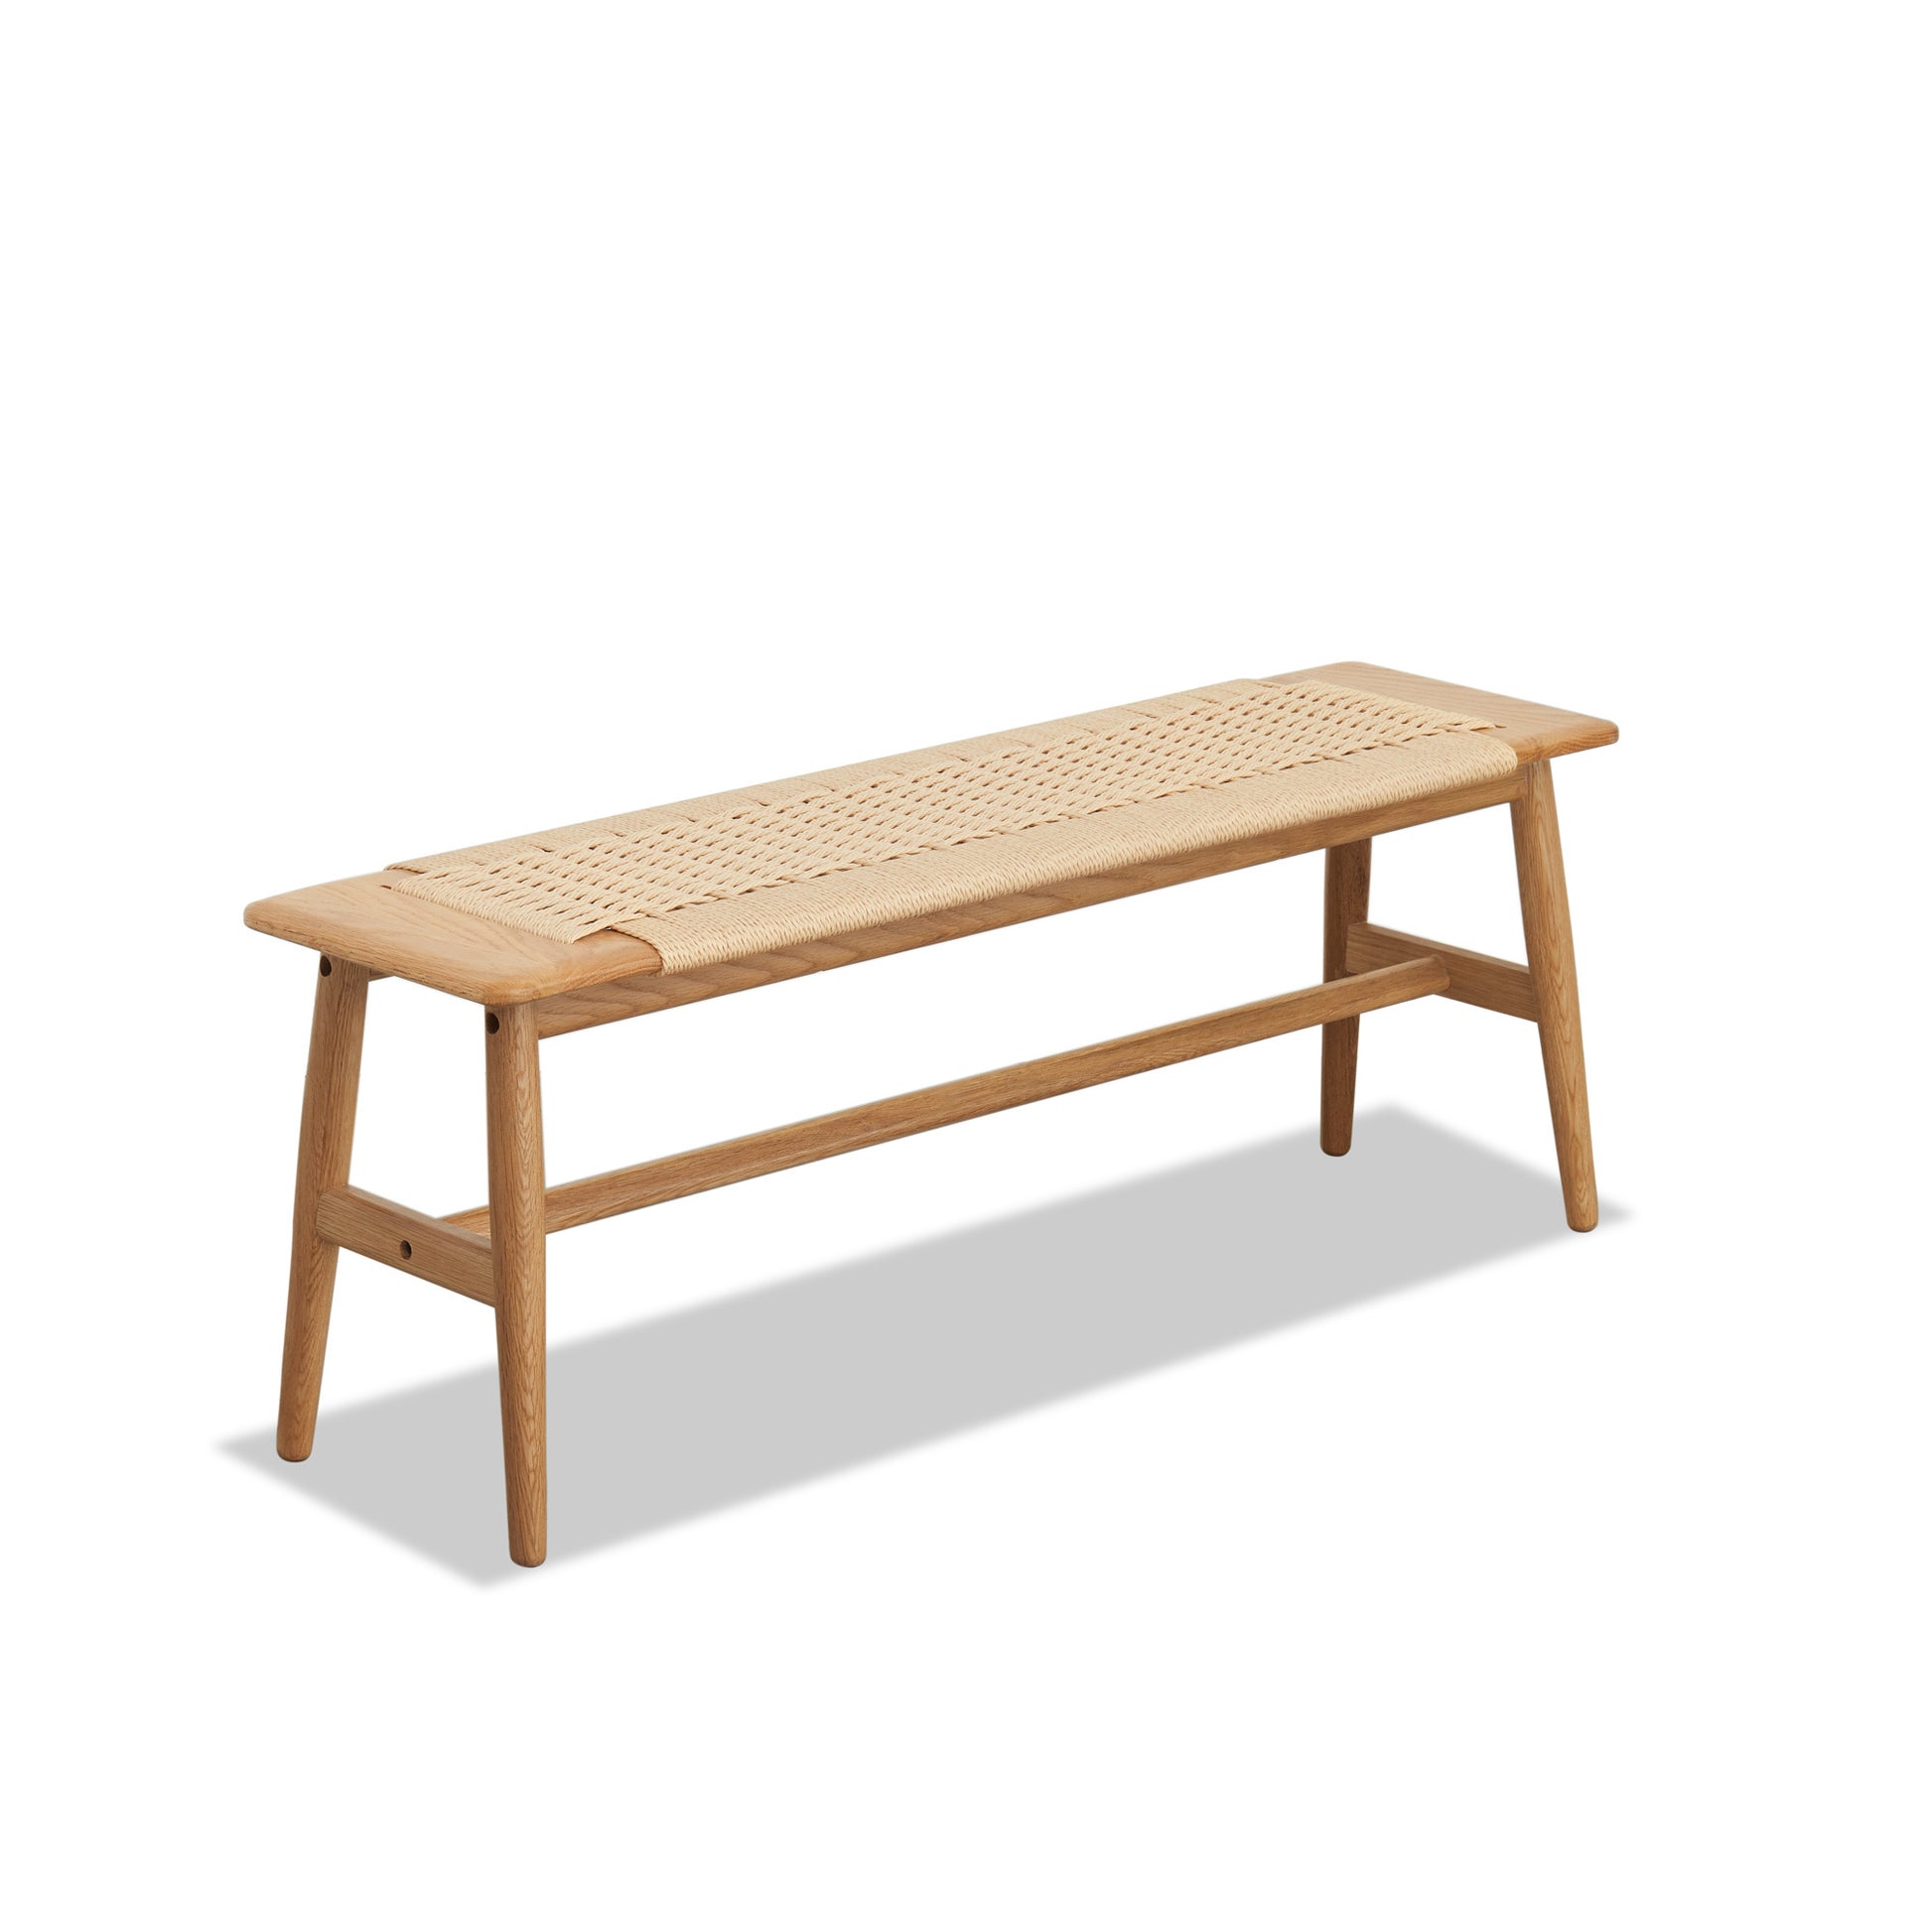 Woven Design Natural Solid Oak Wood Bench